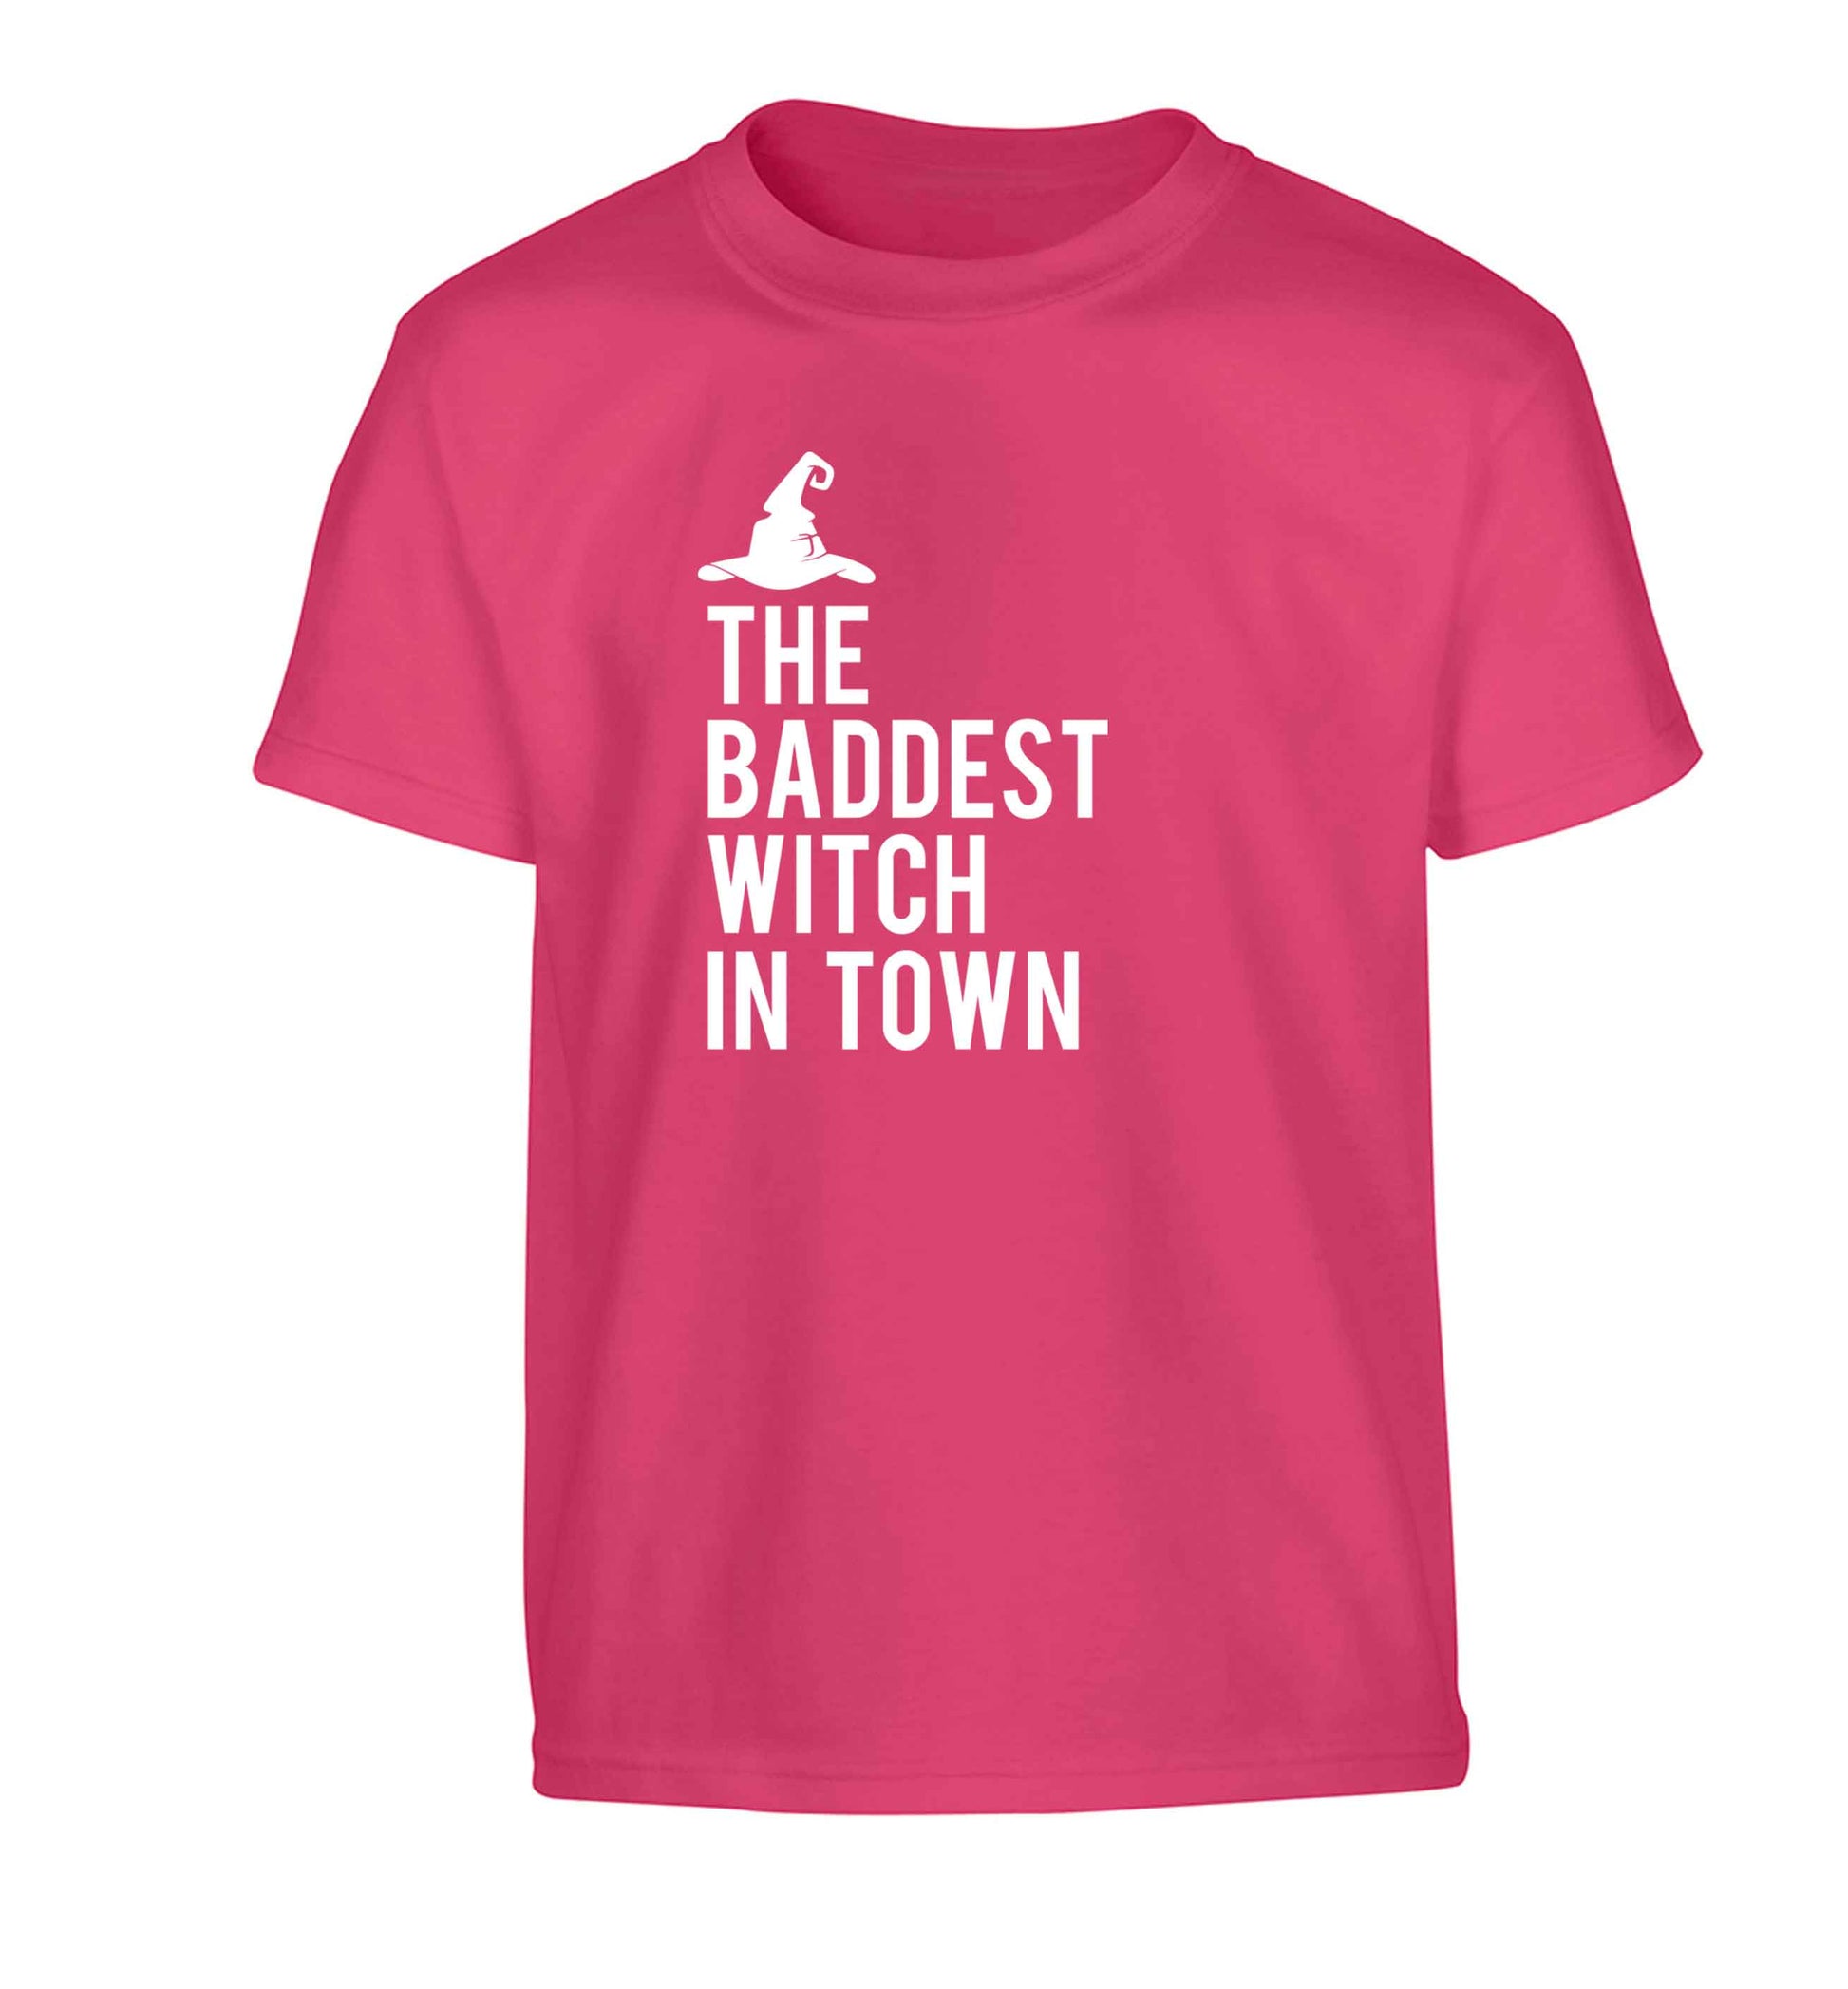 Badest witch in town Children's pink Tshirt 12-13 Years